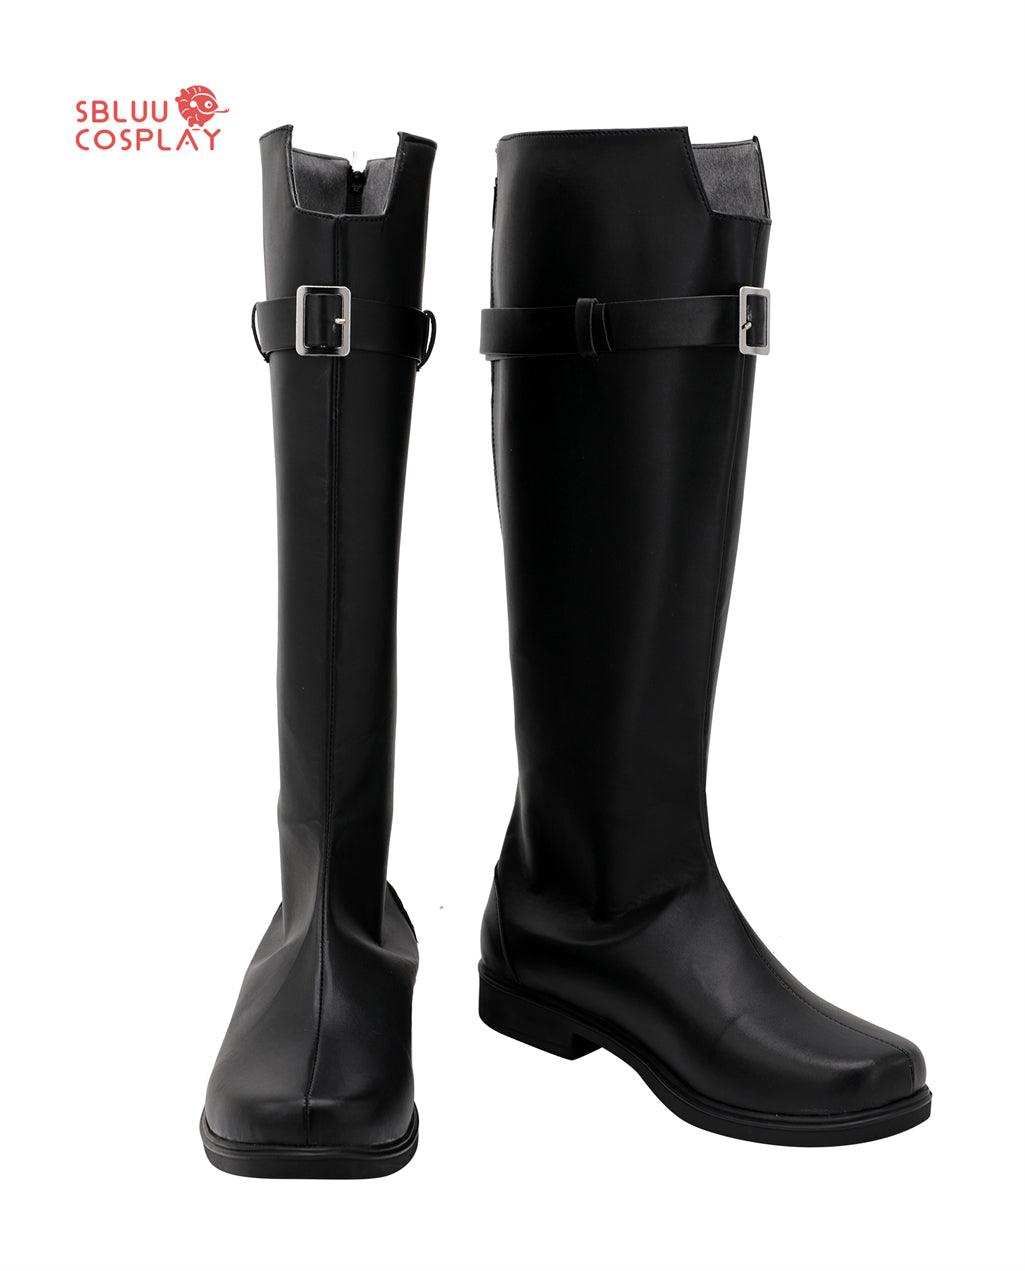 SBluuCosplay Final Fantasy VII Sephiroth Cosplay Shoes Custom Made Boots - SBluuCosplay